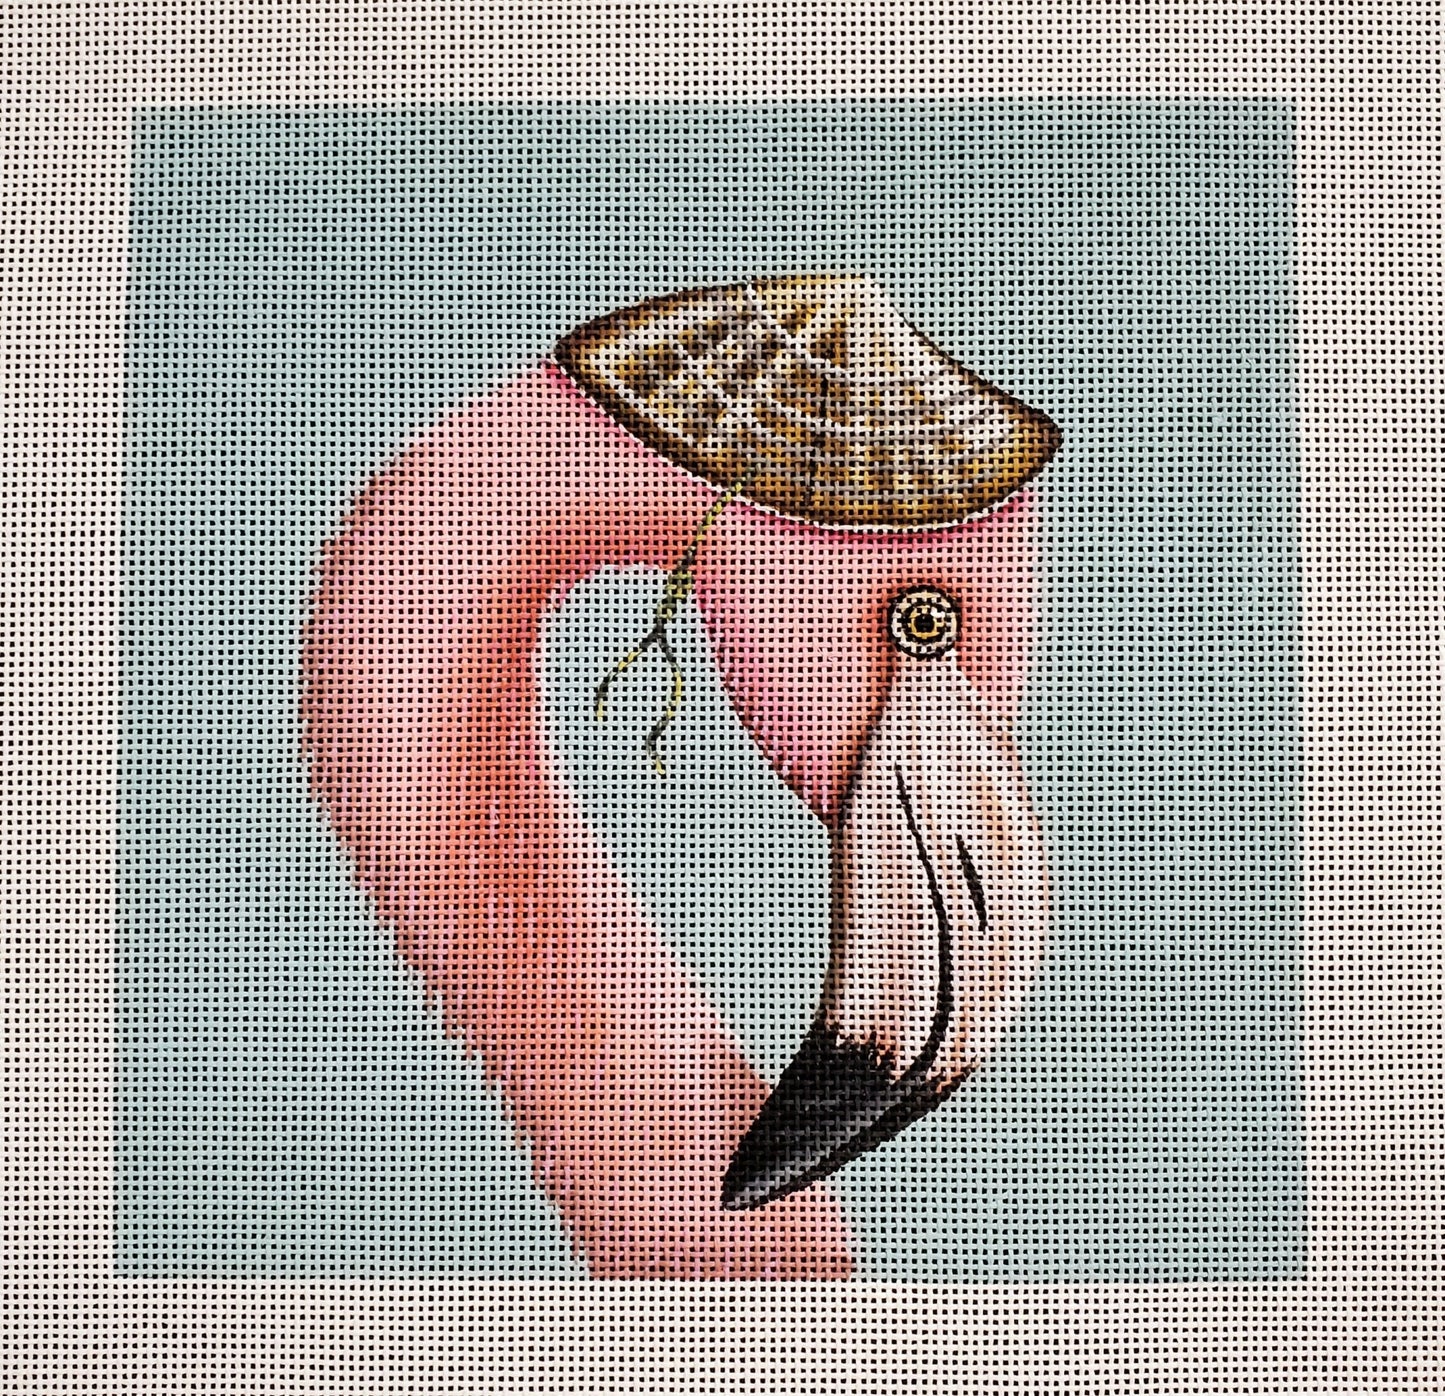 Jordan the Flamingo - The Flying Needles